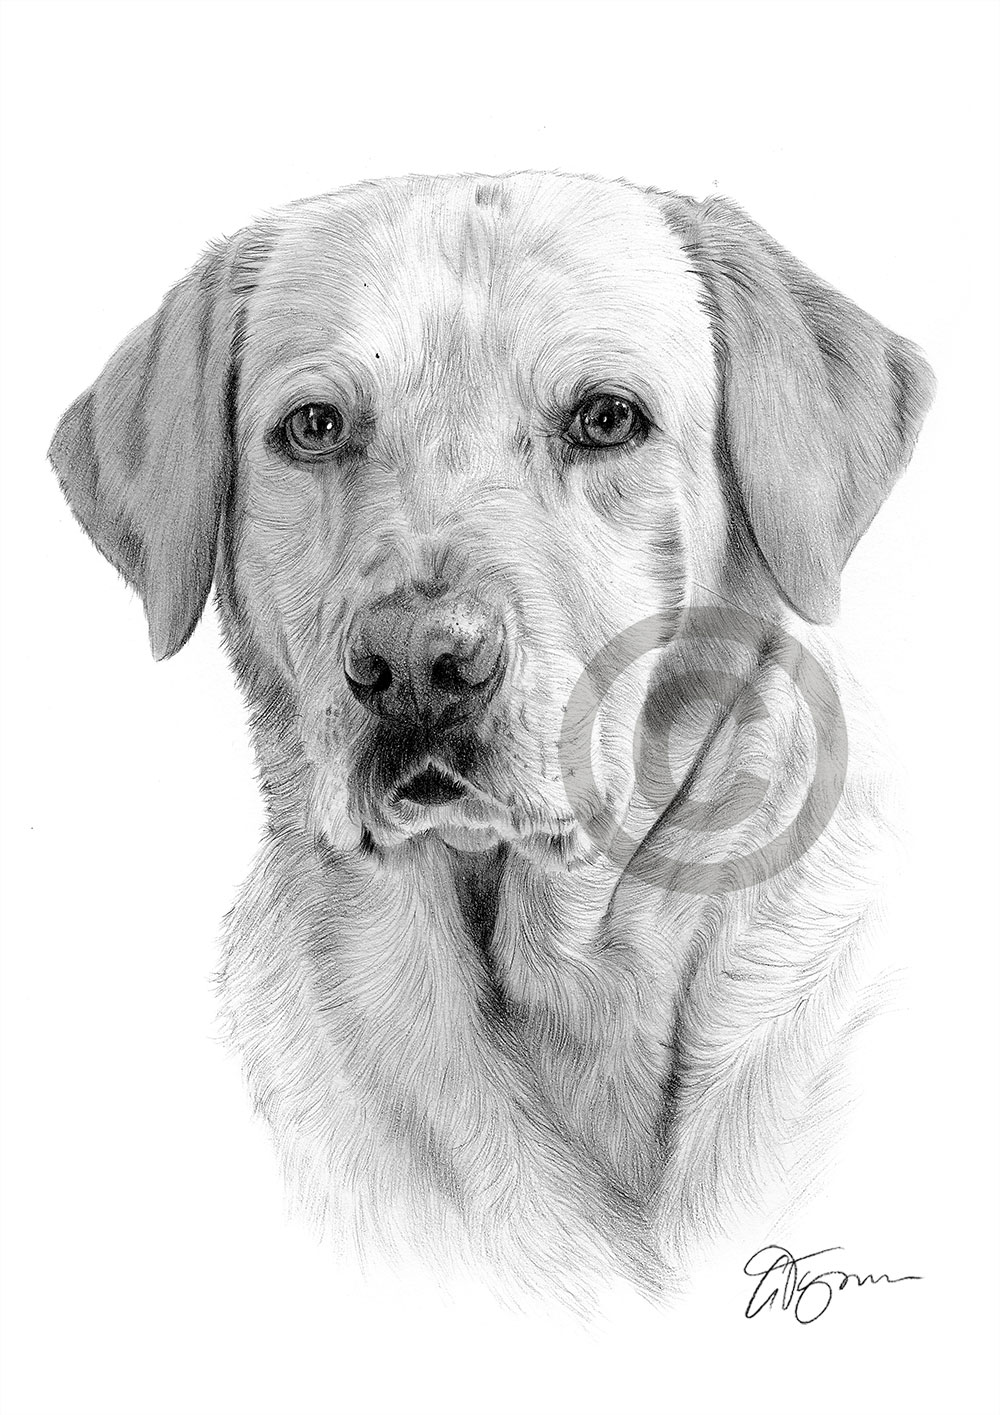 LABRADOR RETRIEVER artwork pencil drawing A3 / A4 sizes pet portrait